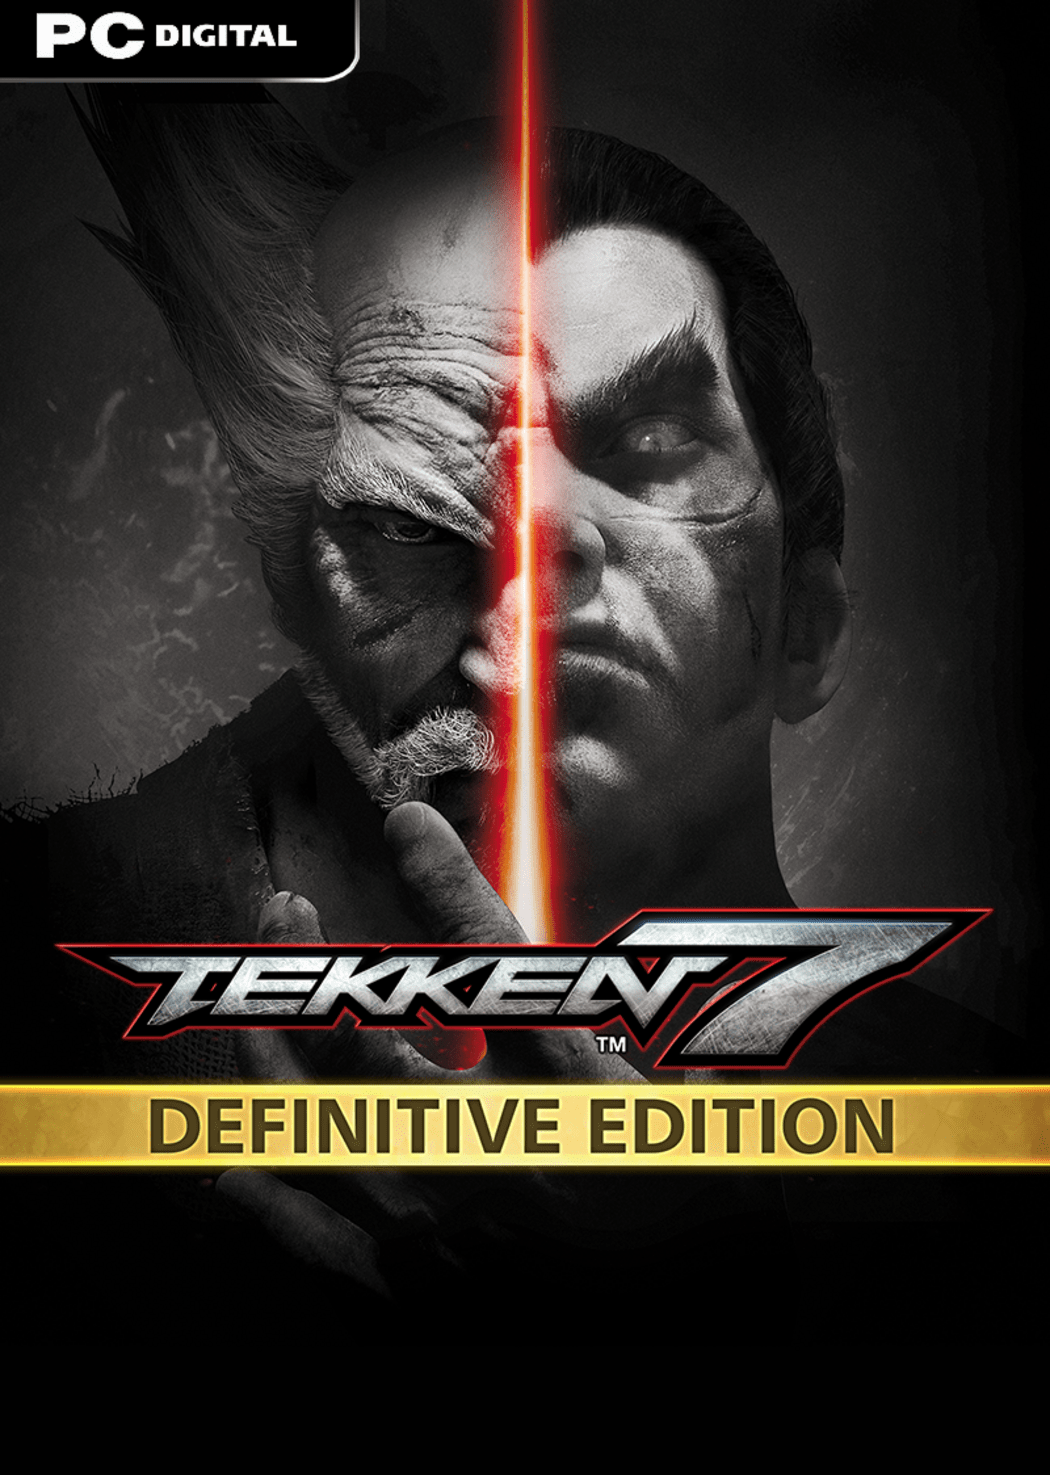 Empleado adolescentes Corteza Buy TEKKEN 7 - Definitive Edition Steam Key for PC at a cheaper price today  | ENEBA